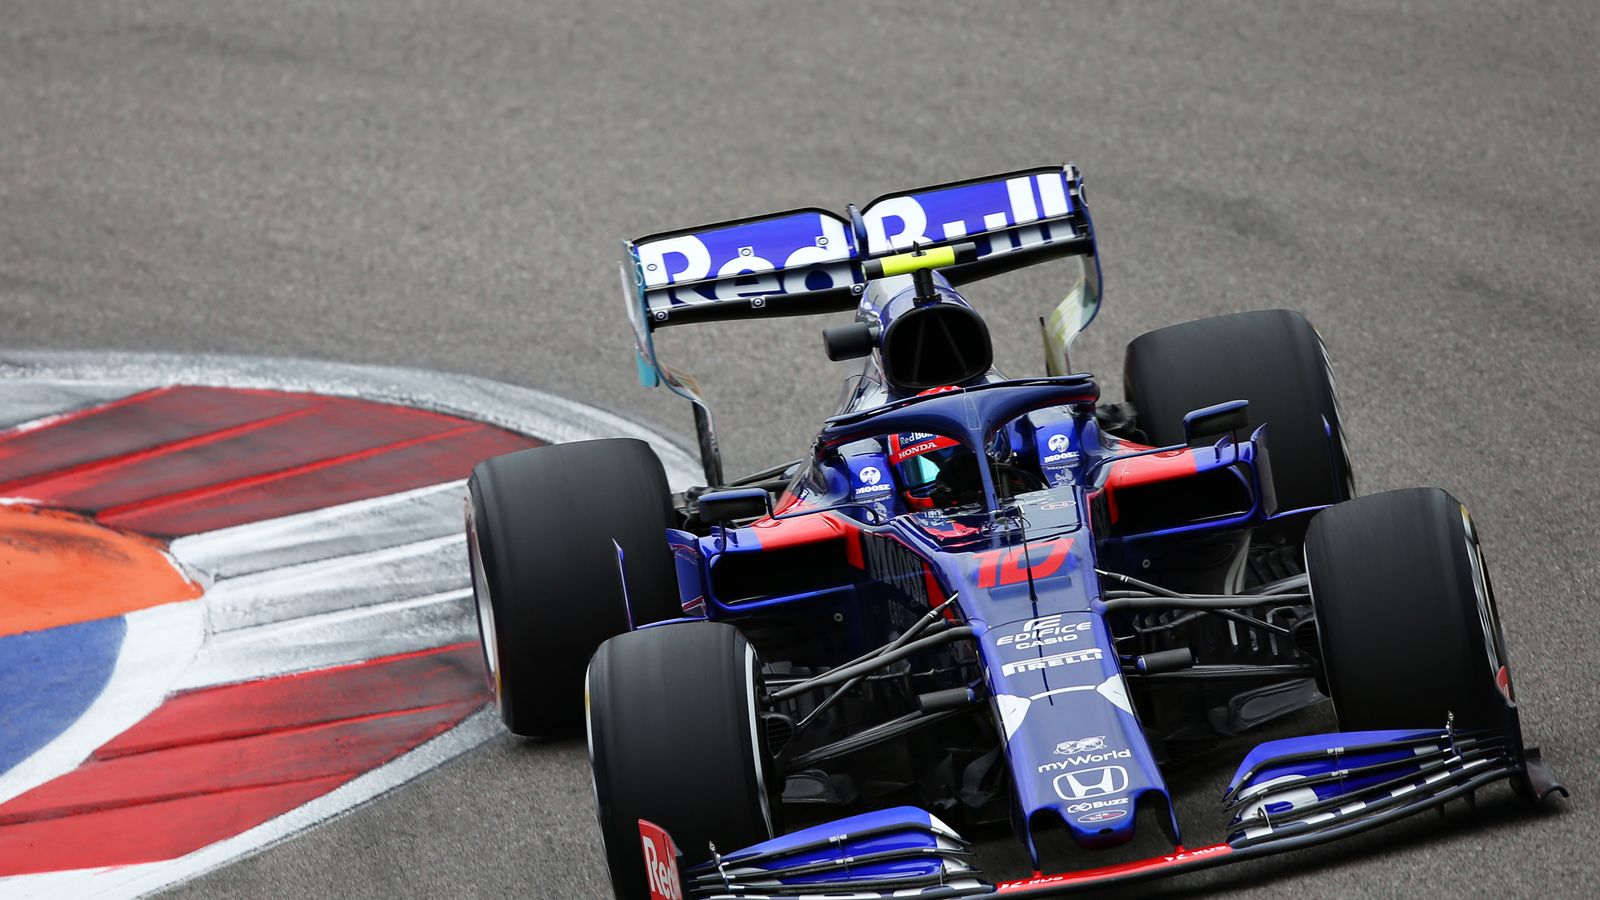 Formel 1 Toro Rosso benennt sich wohl nach Modemarke Alpha Tauri Formel 1 News Sky Sport